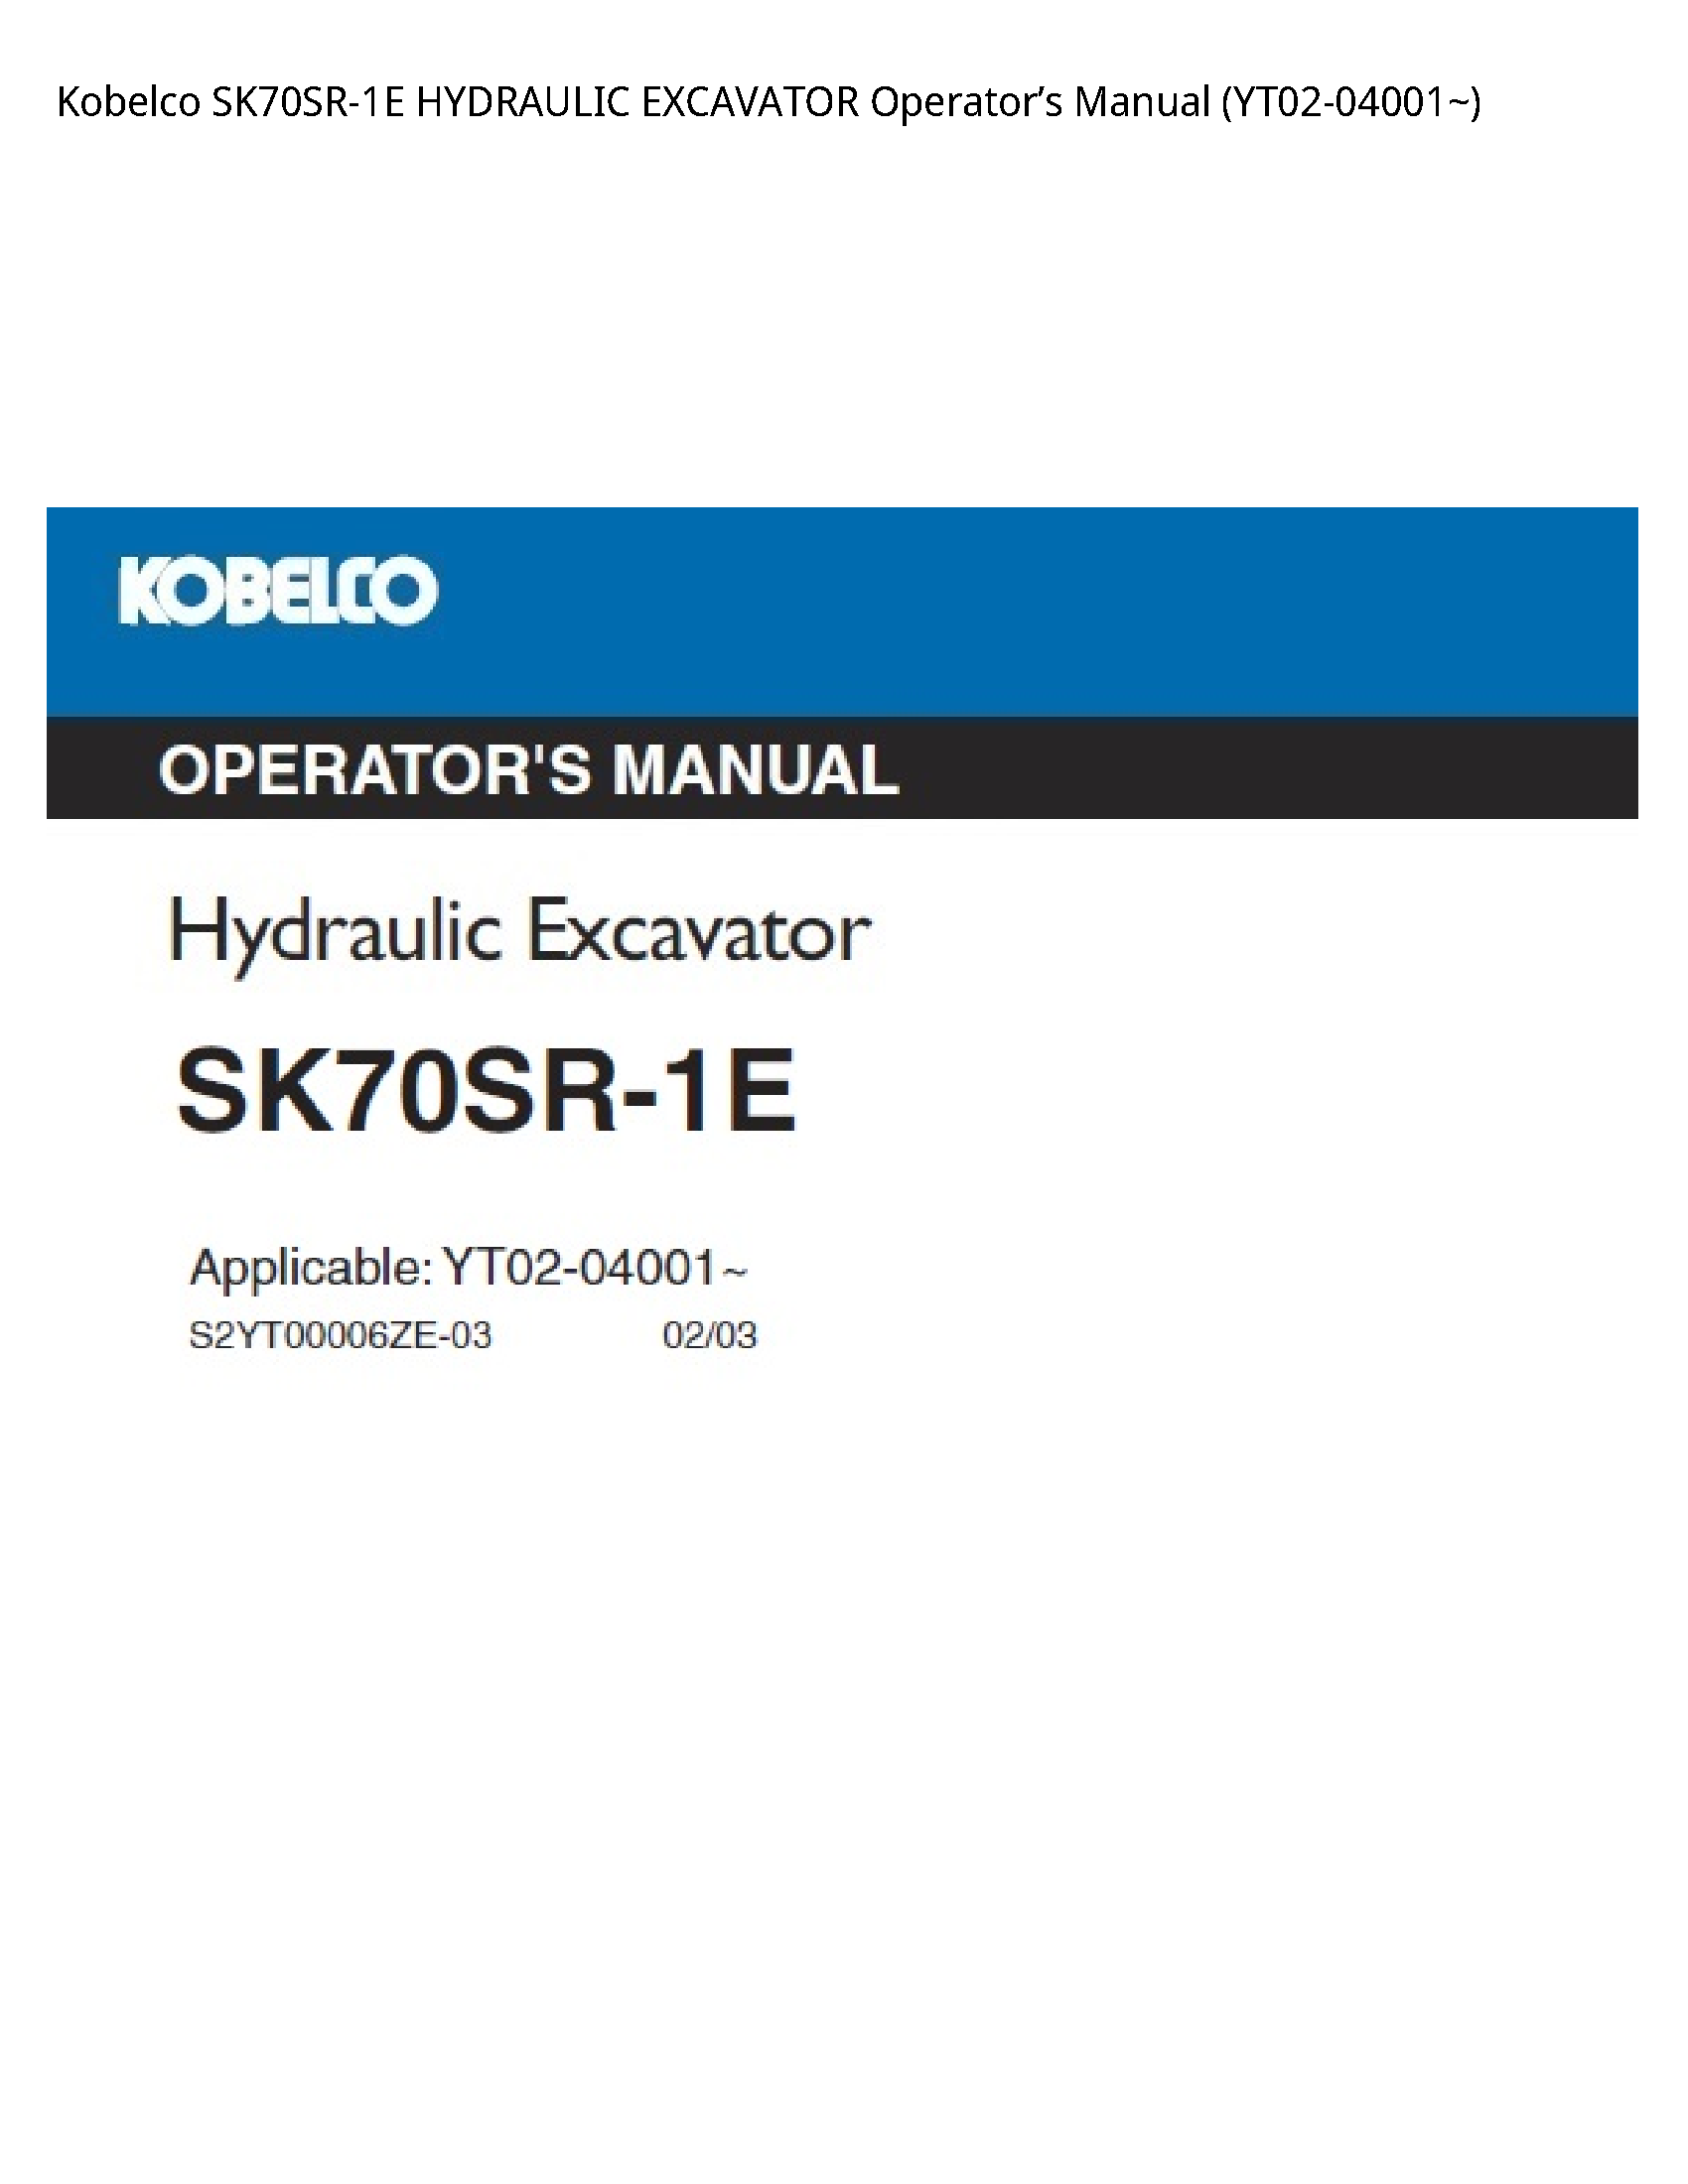 Kobelco SK70SR-1E HYDRAULIC EXCAVATOR Operator’s manual